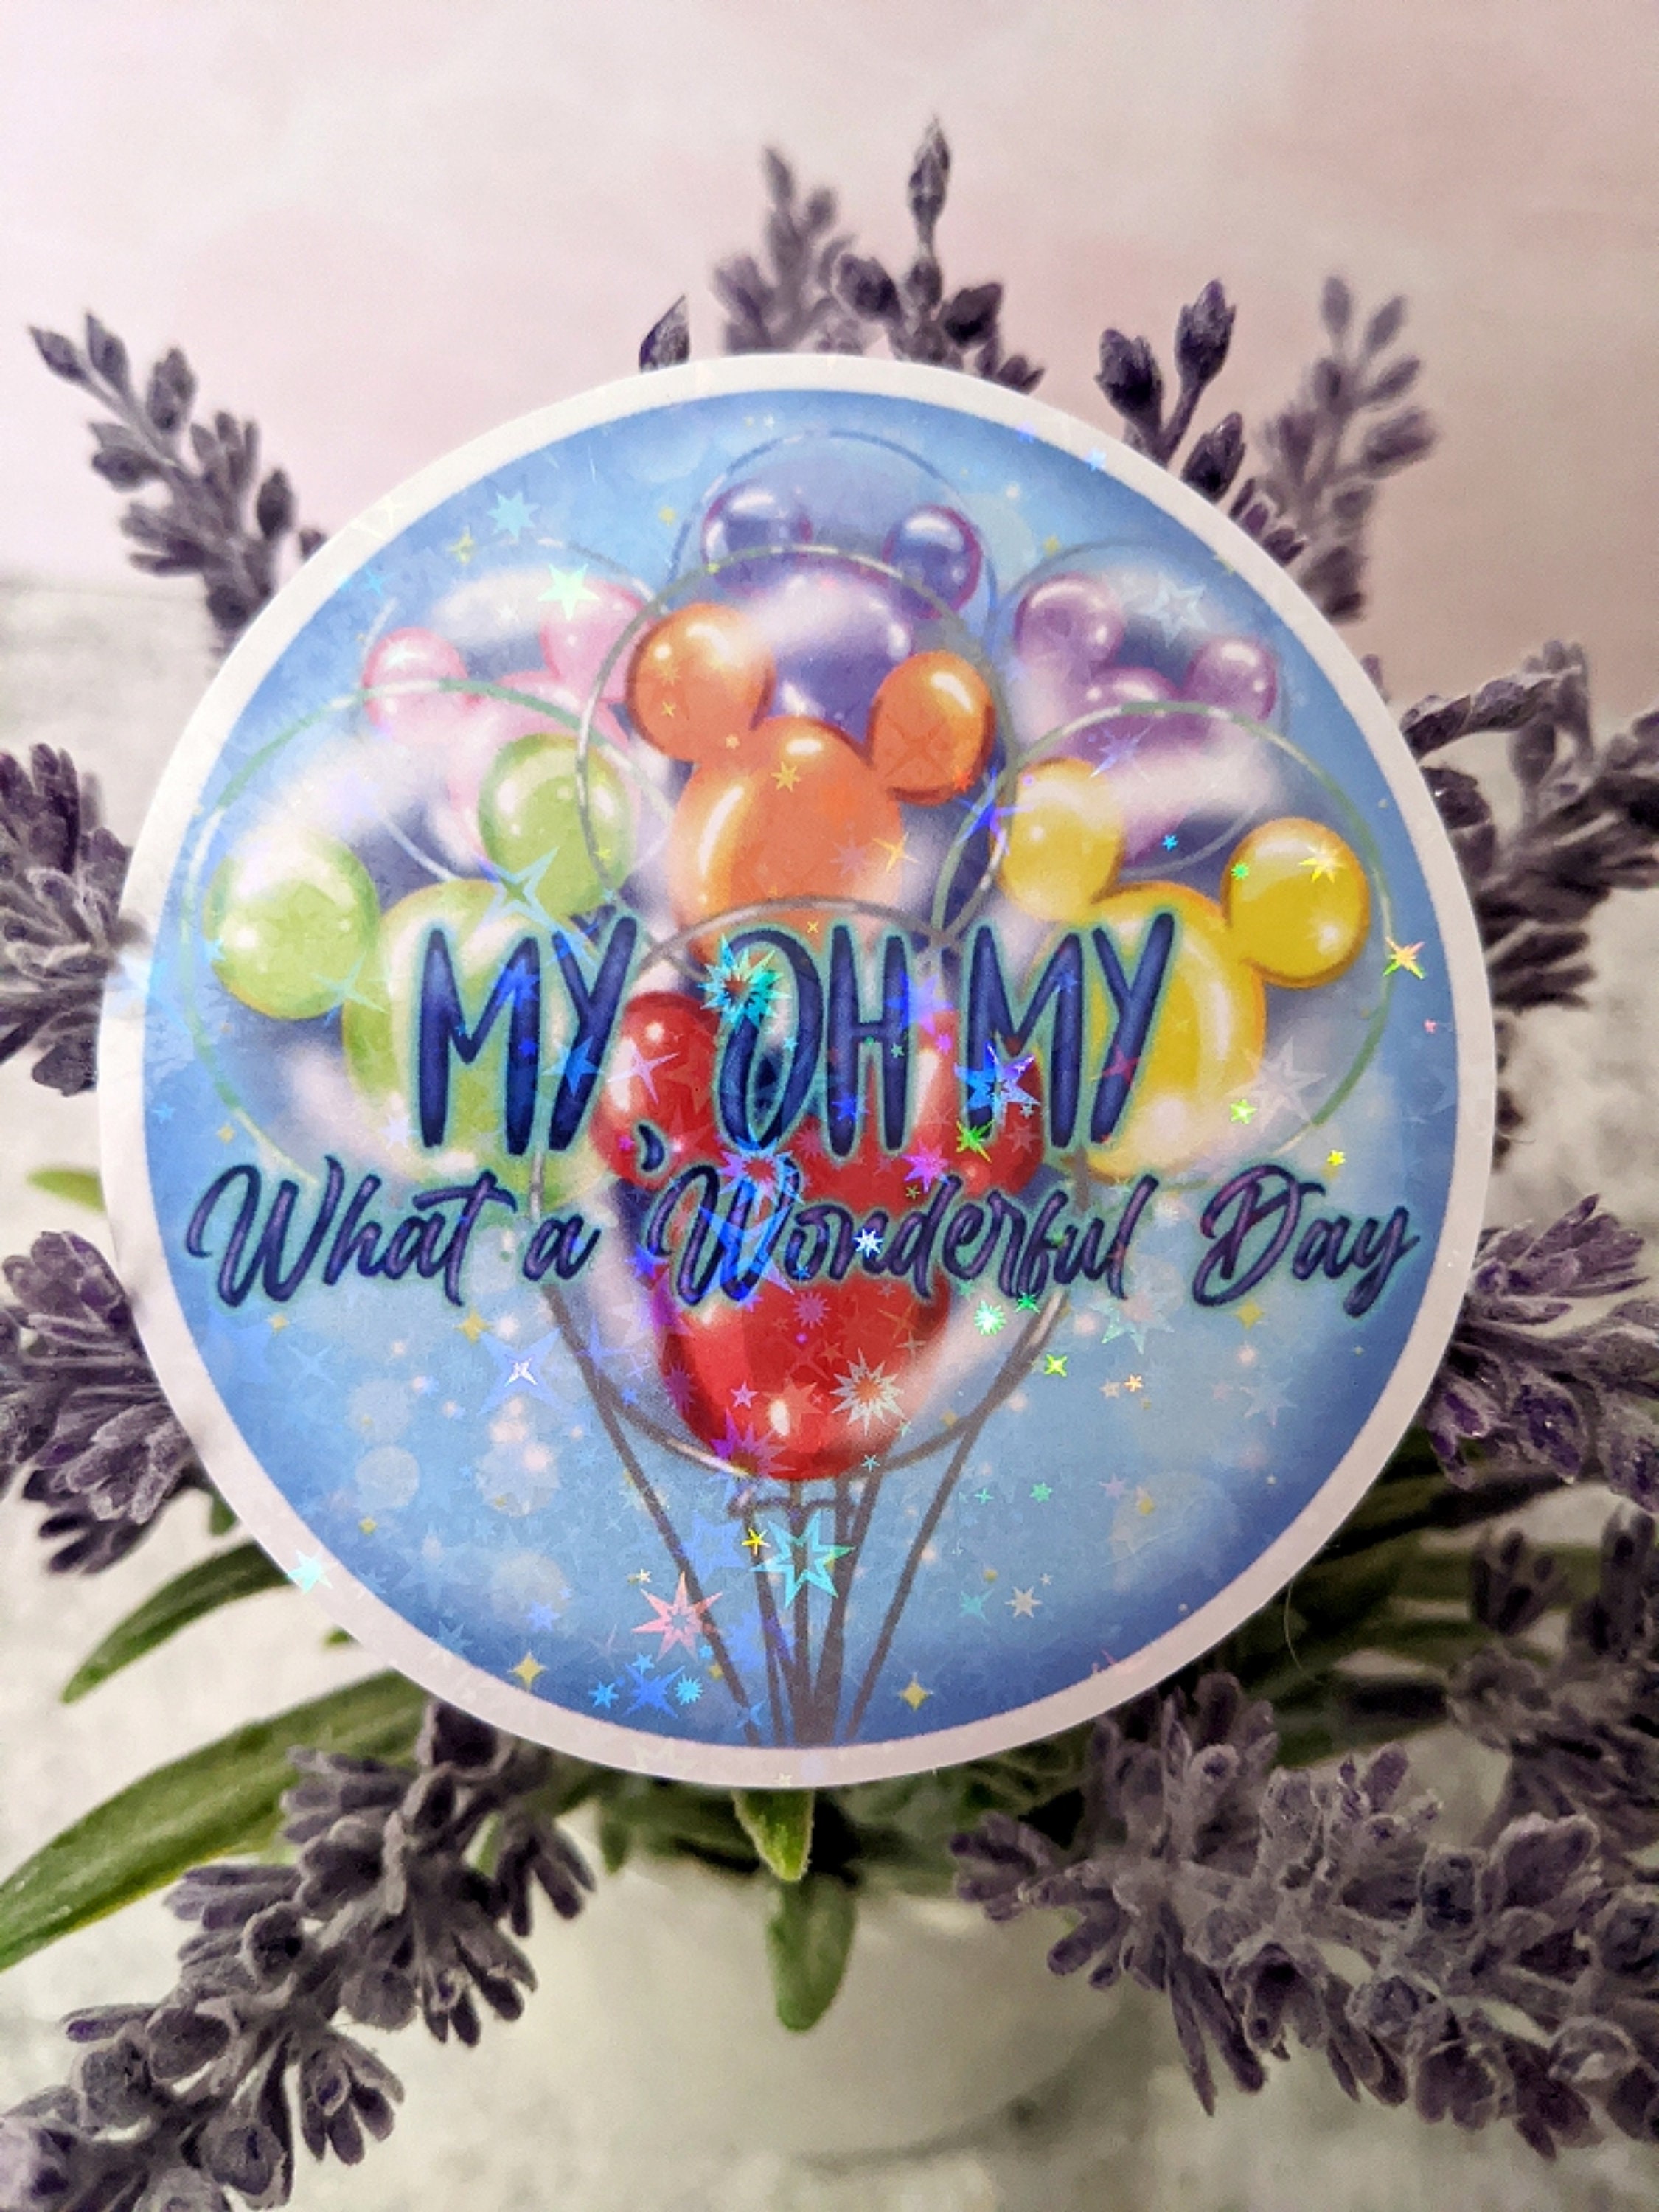 Rainbow Mickey Mouse Disney Stickers Transparent Waterproof 